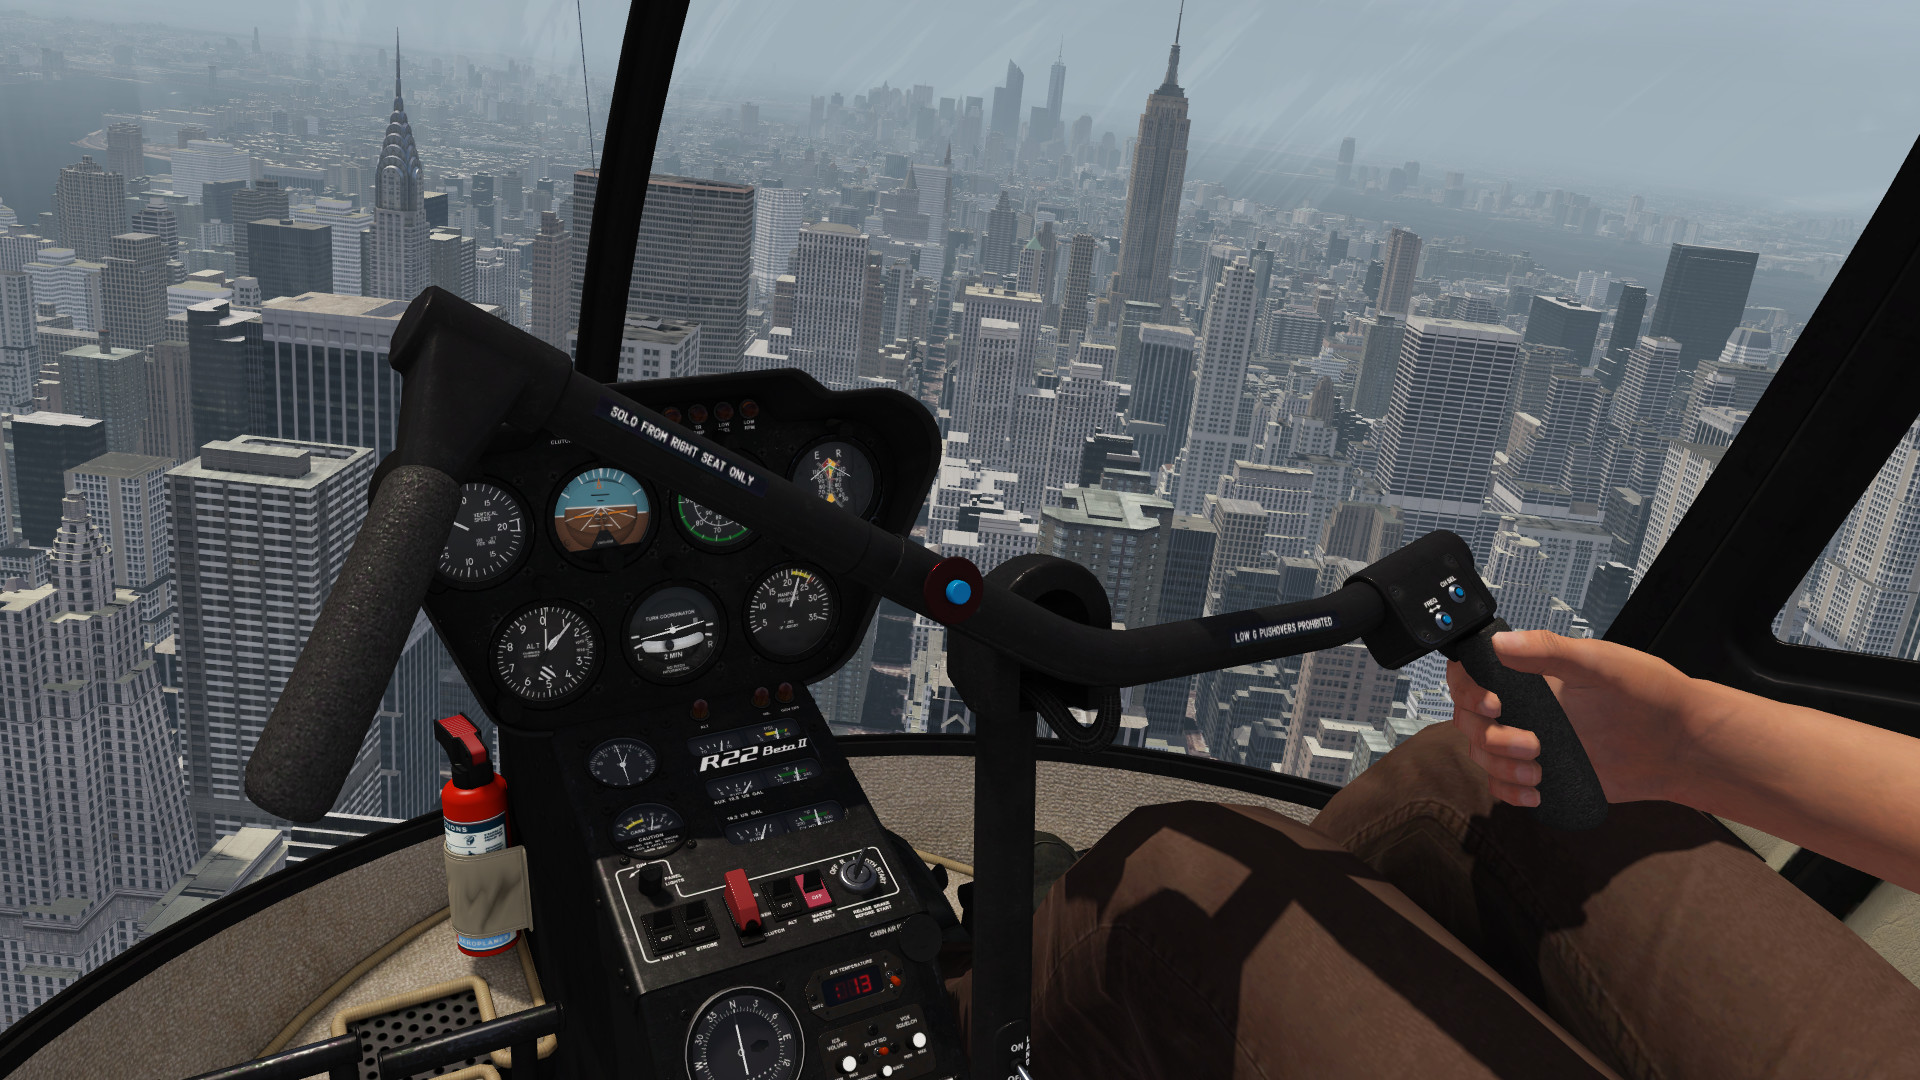 Aerofly FS 2 - Northeastern USA screenshot